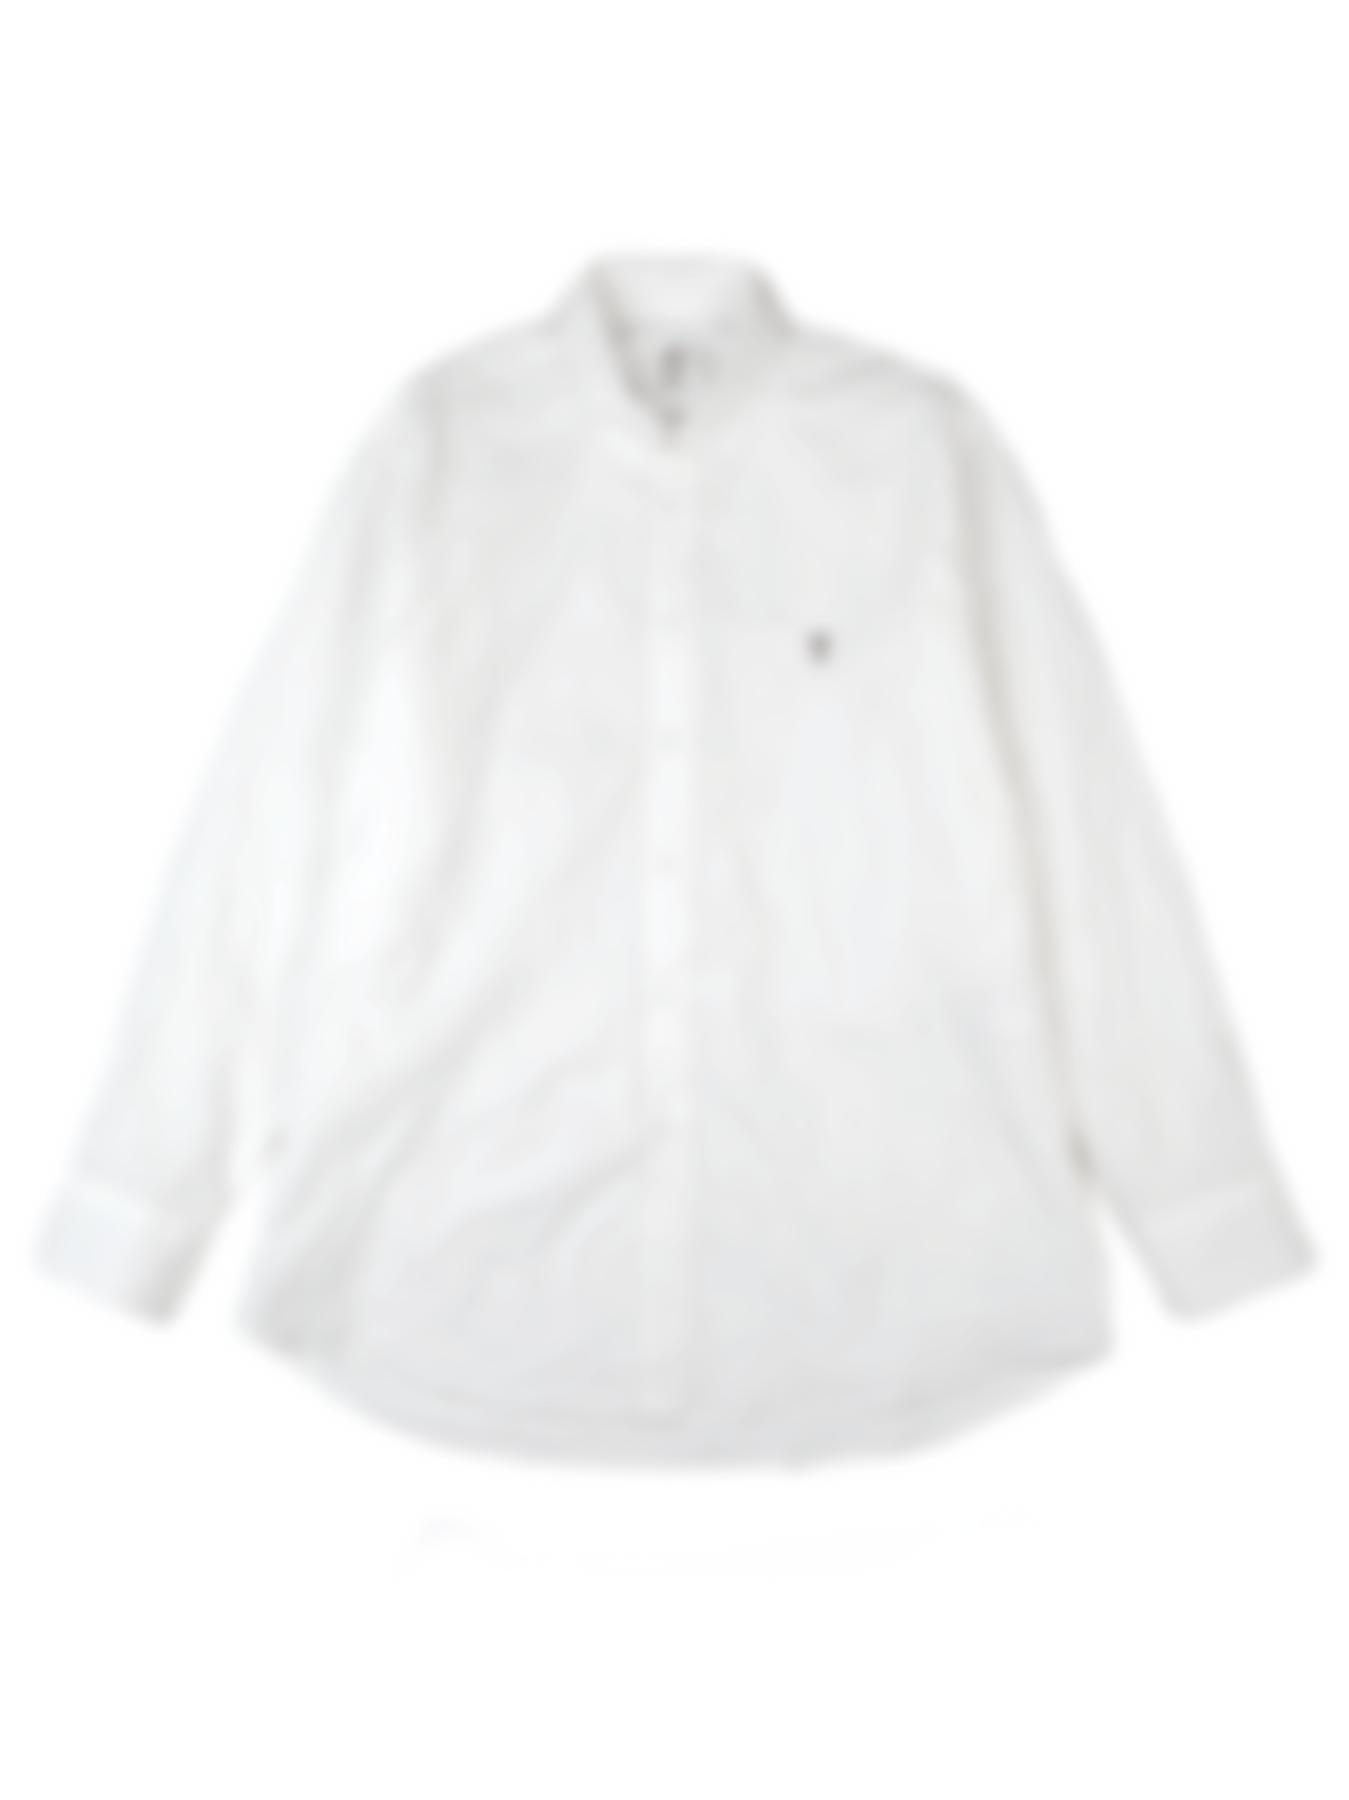 Asymmetric oversized pucker shirts #5 [white]